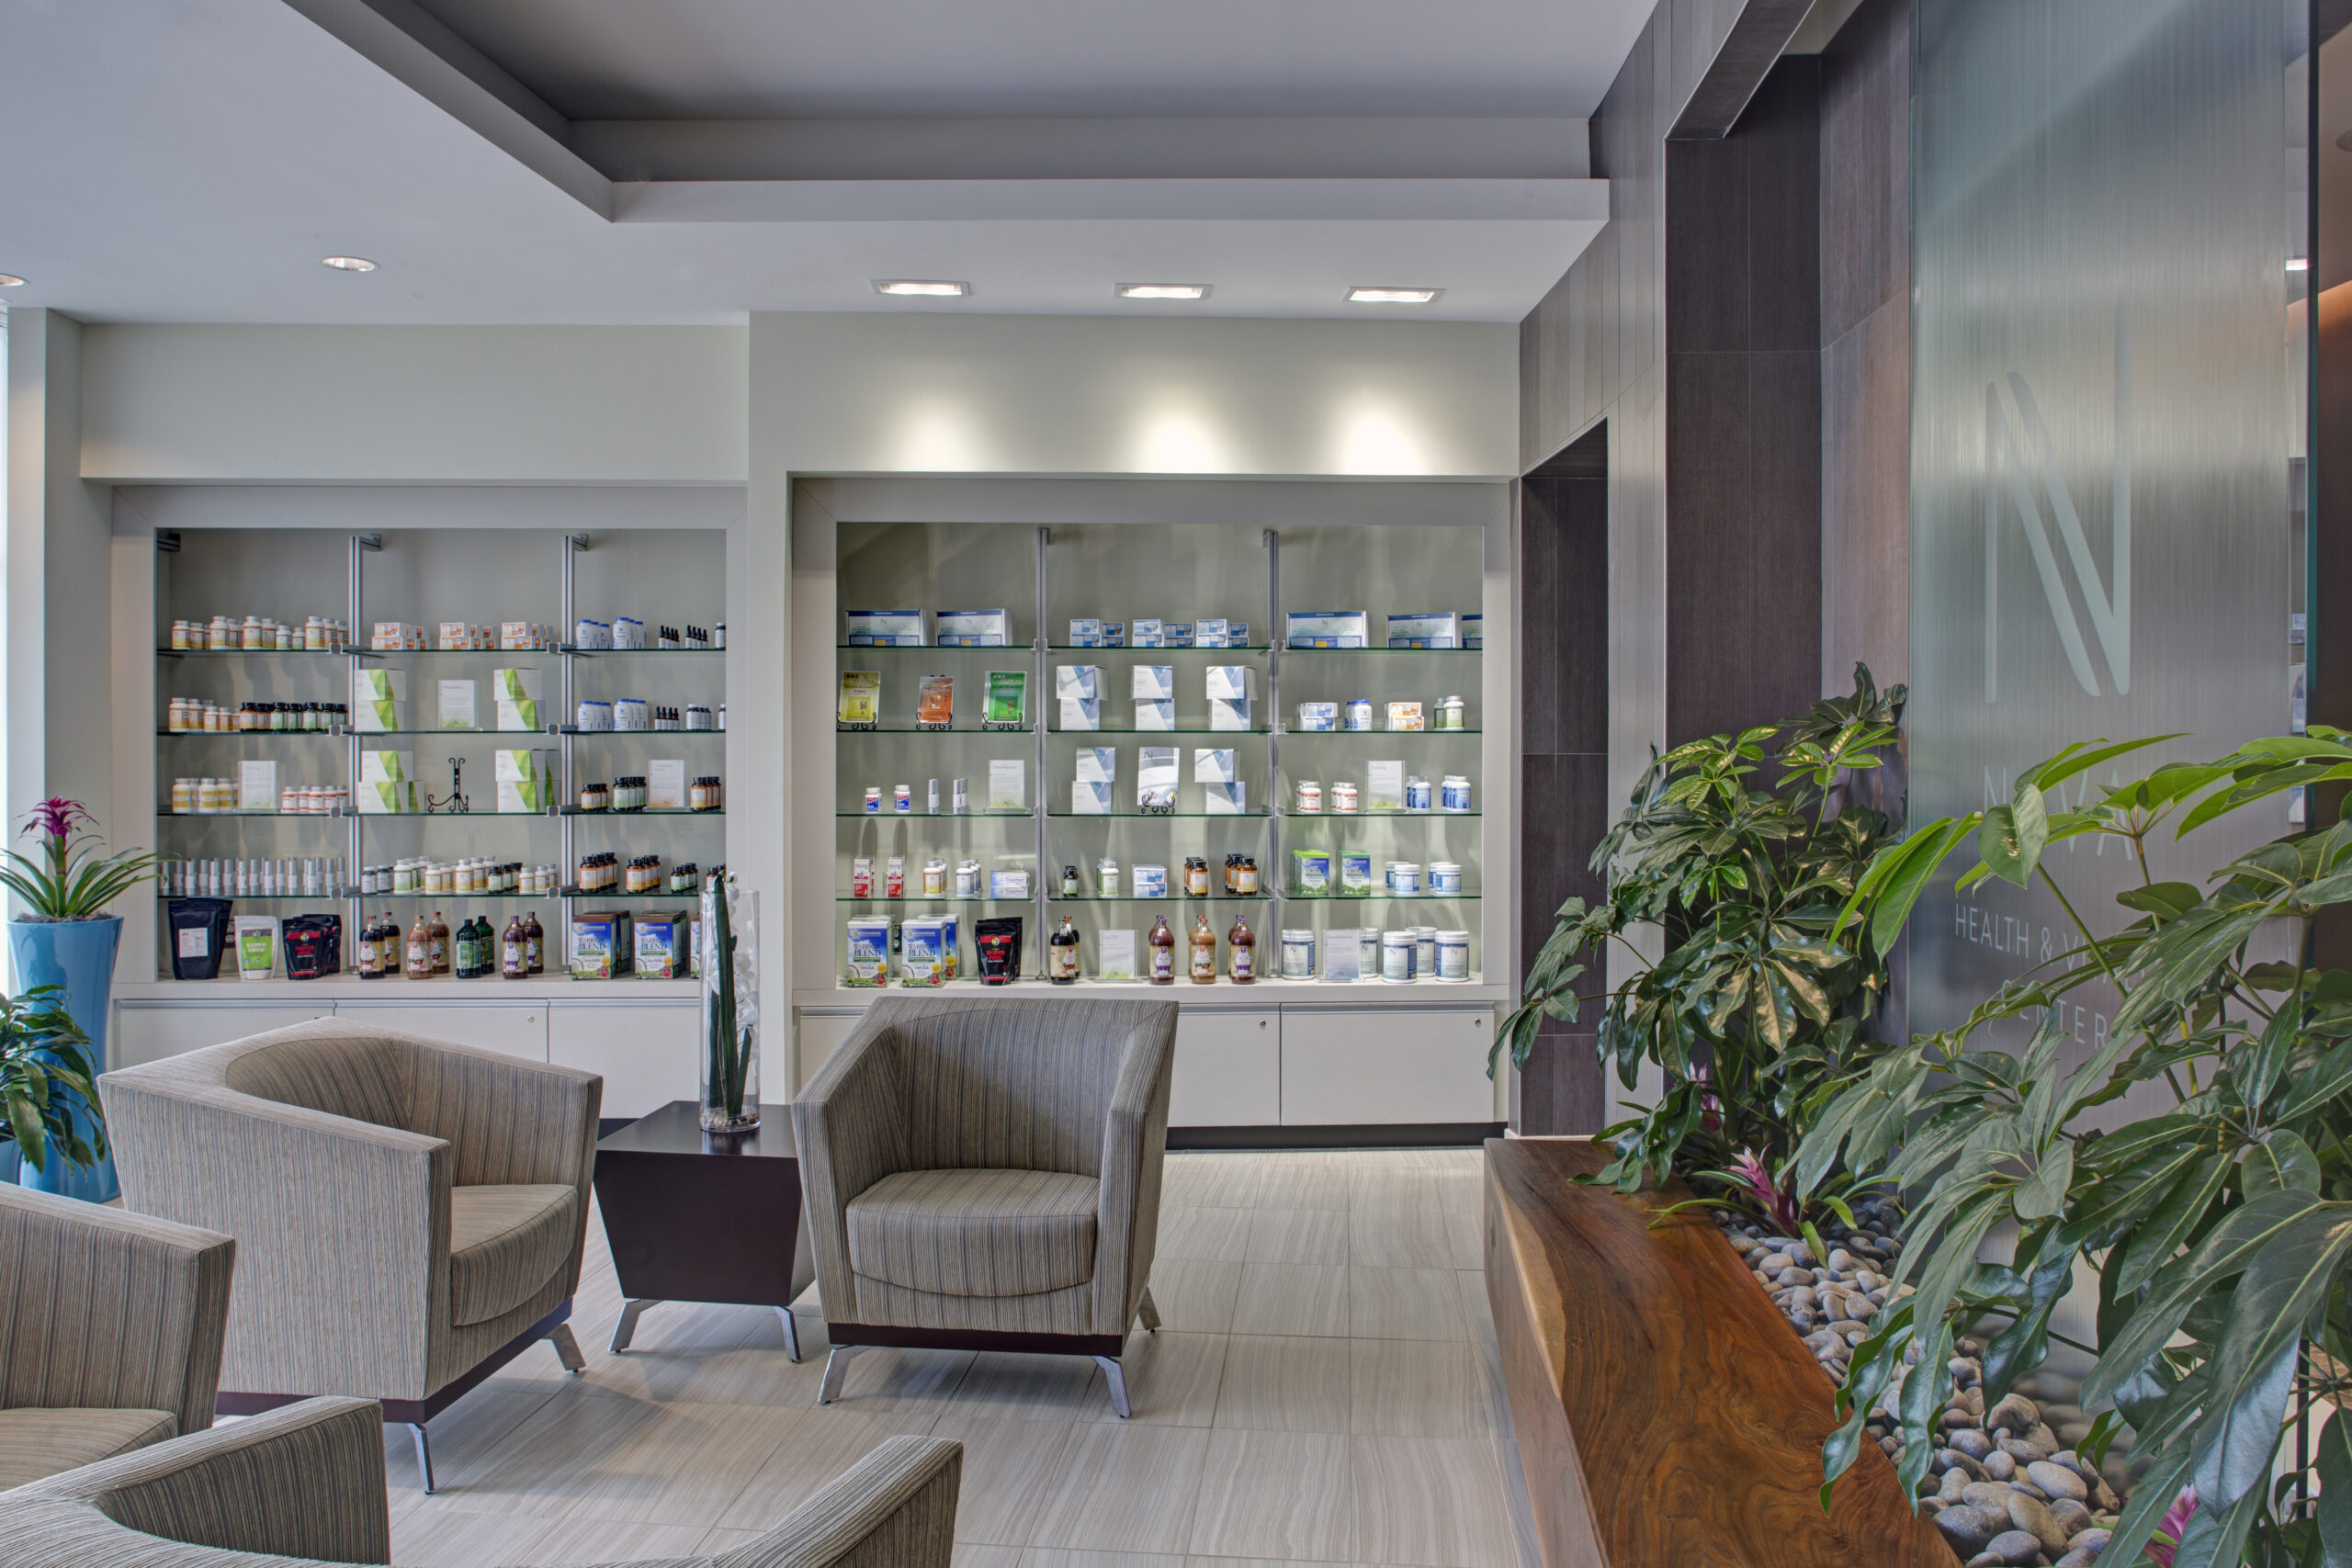 Interior lobby of a Nava Health integrative medicine center